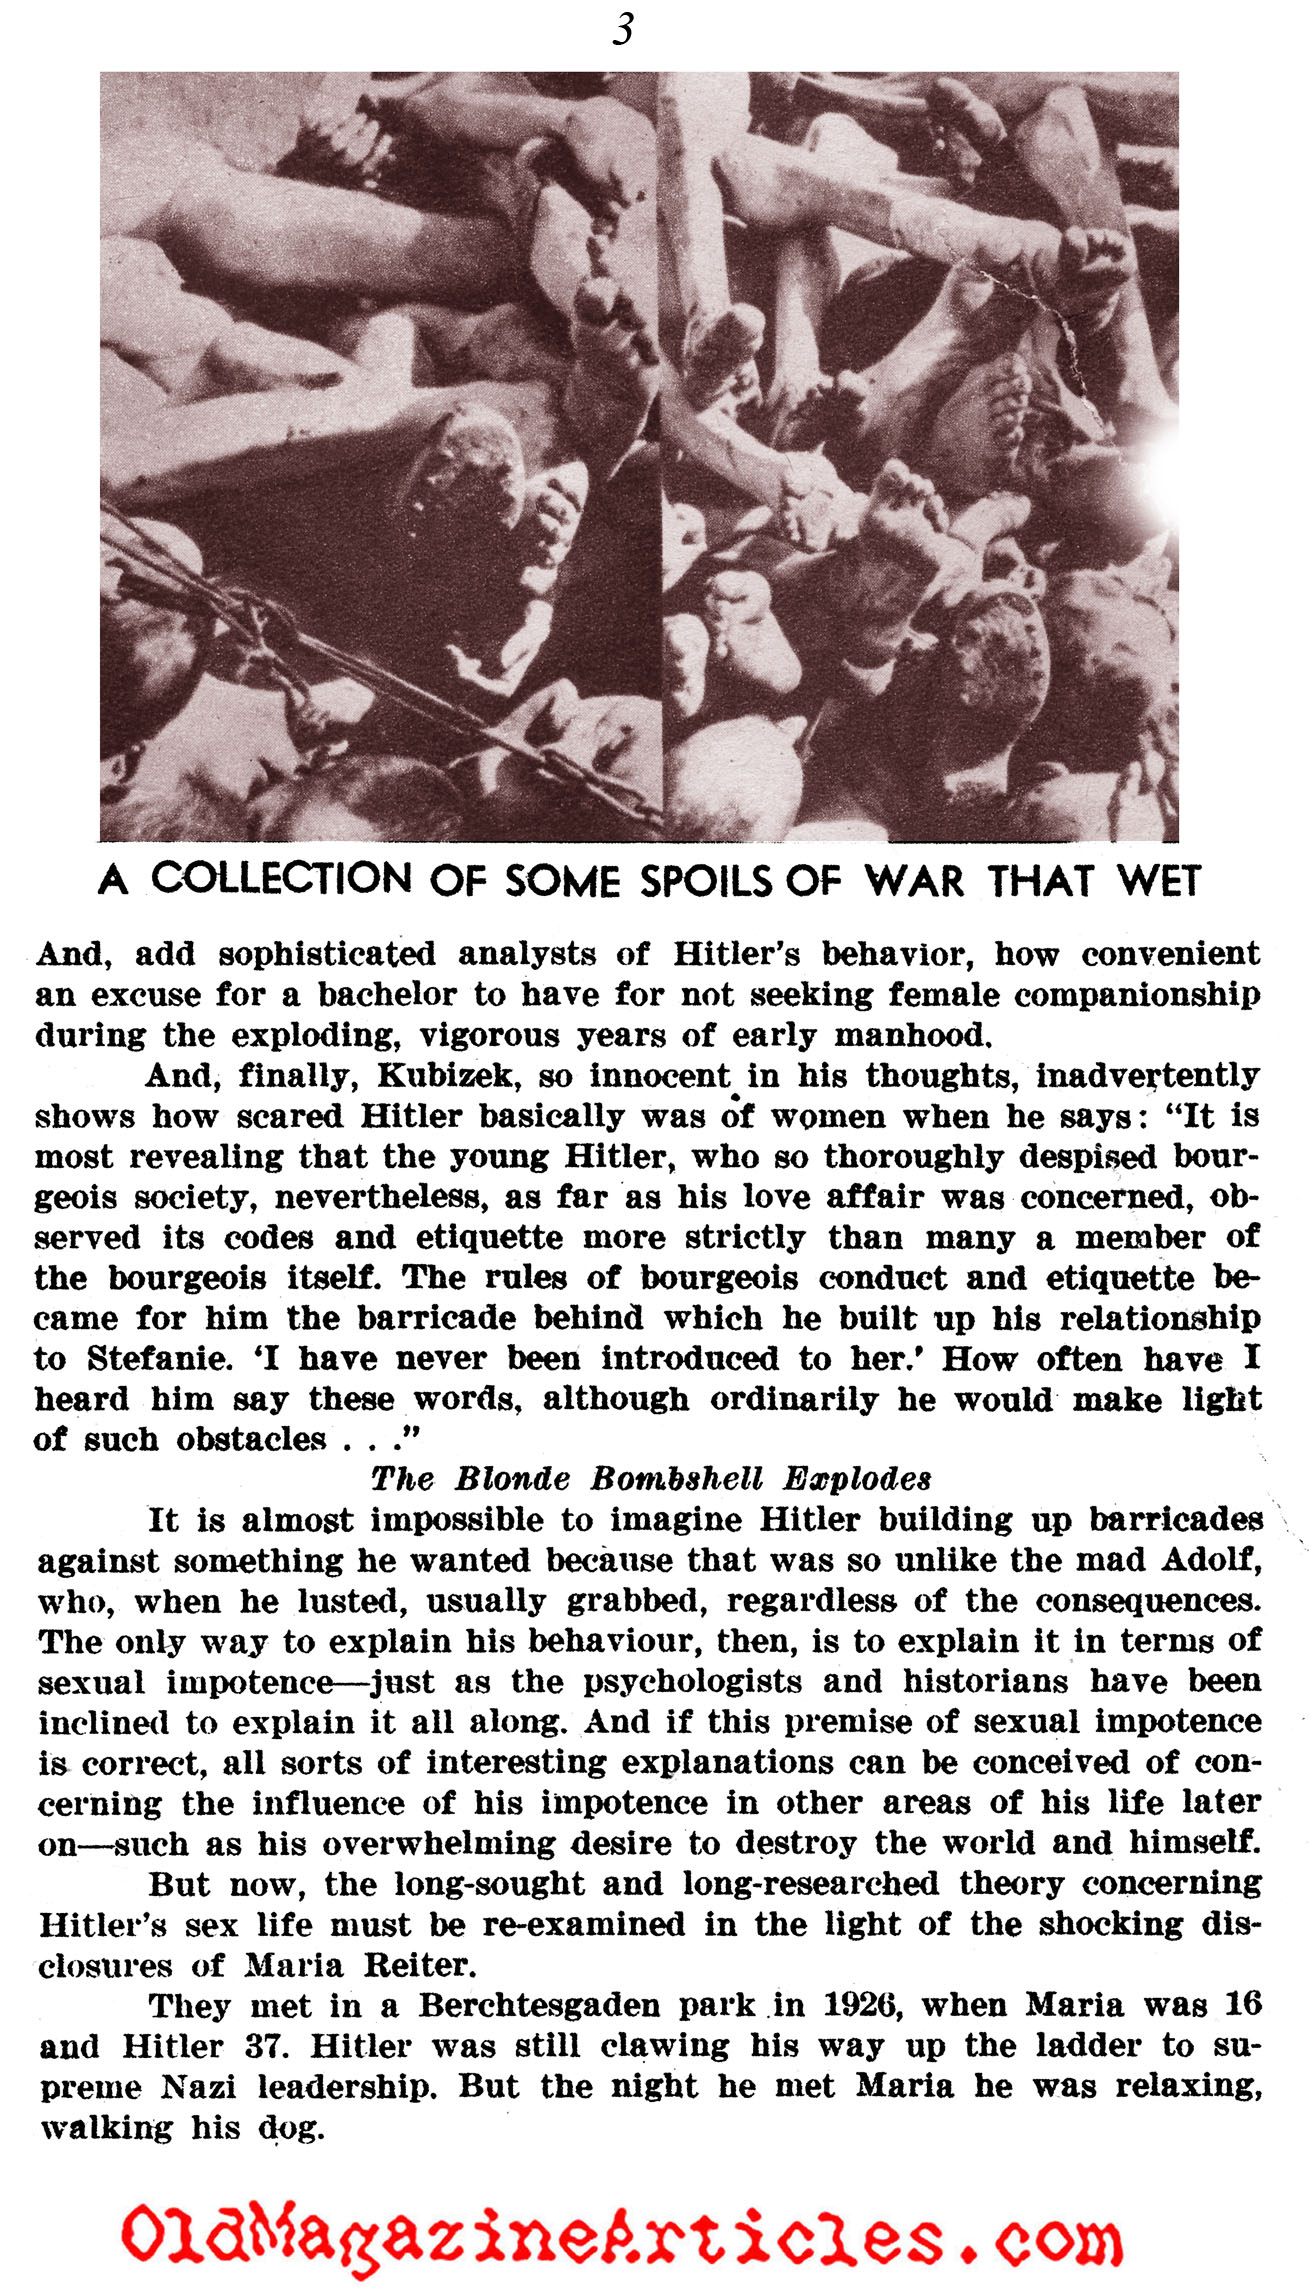 Hitler's Secret Love (Quick Magazine, 1960)